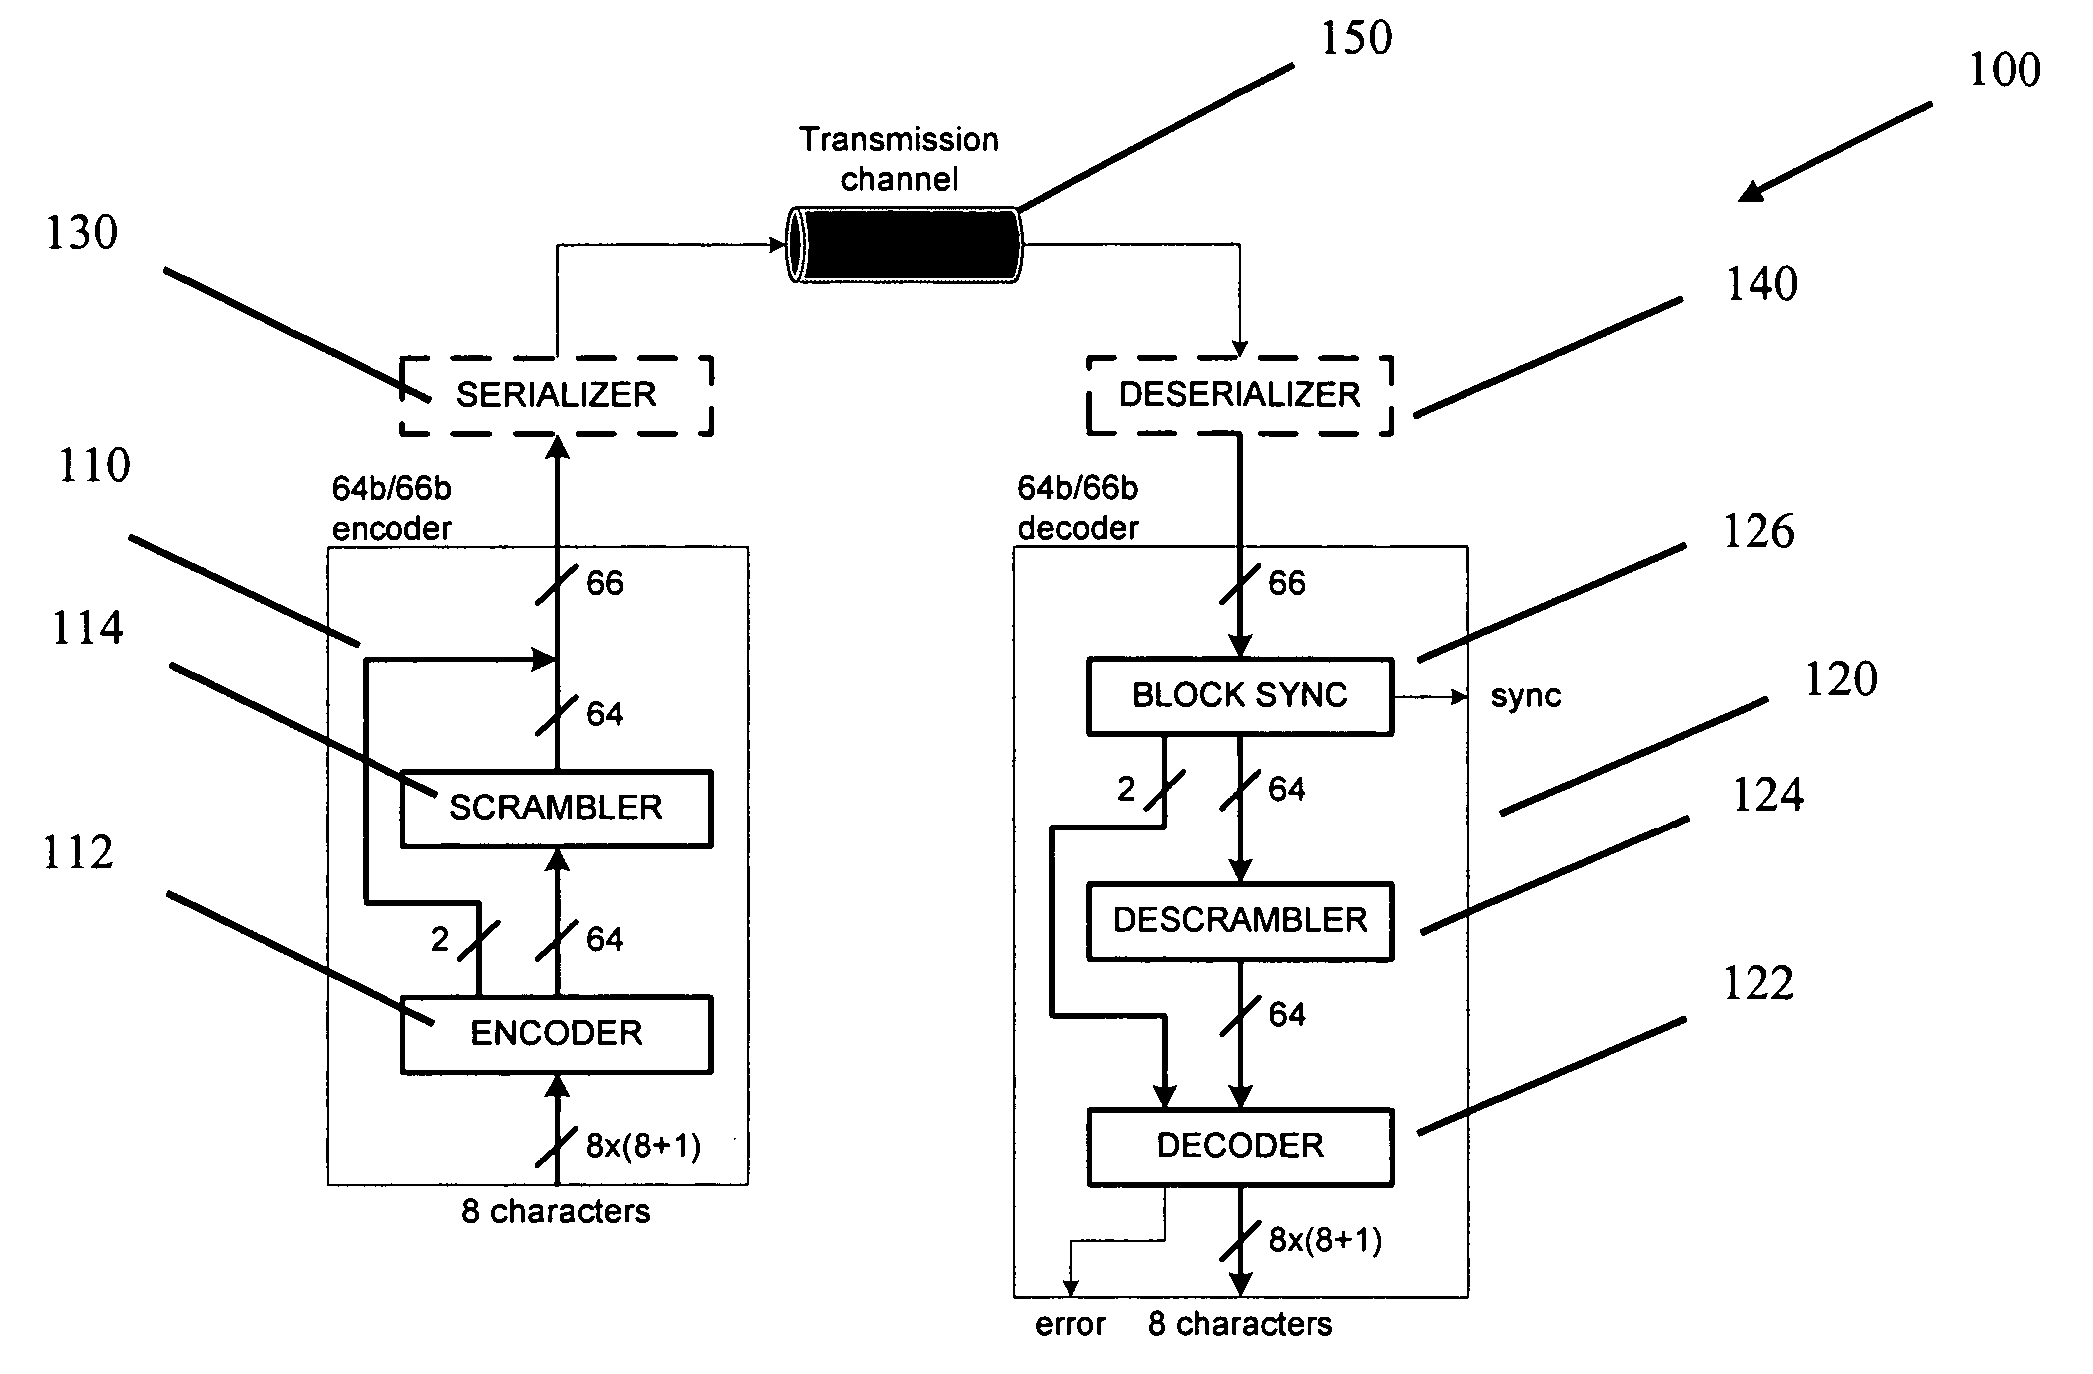 64b/66b Coding apparatus and method